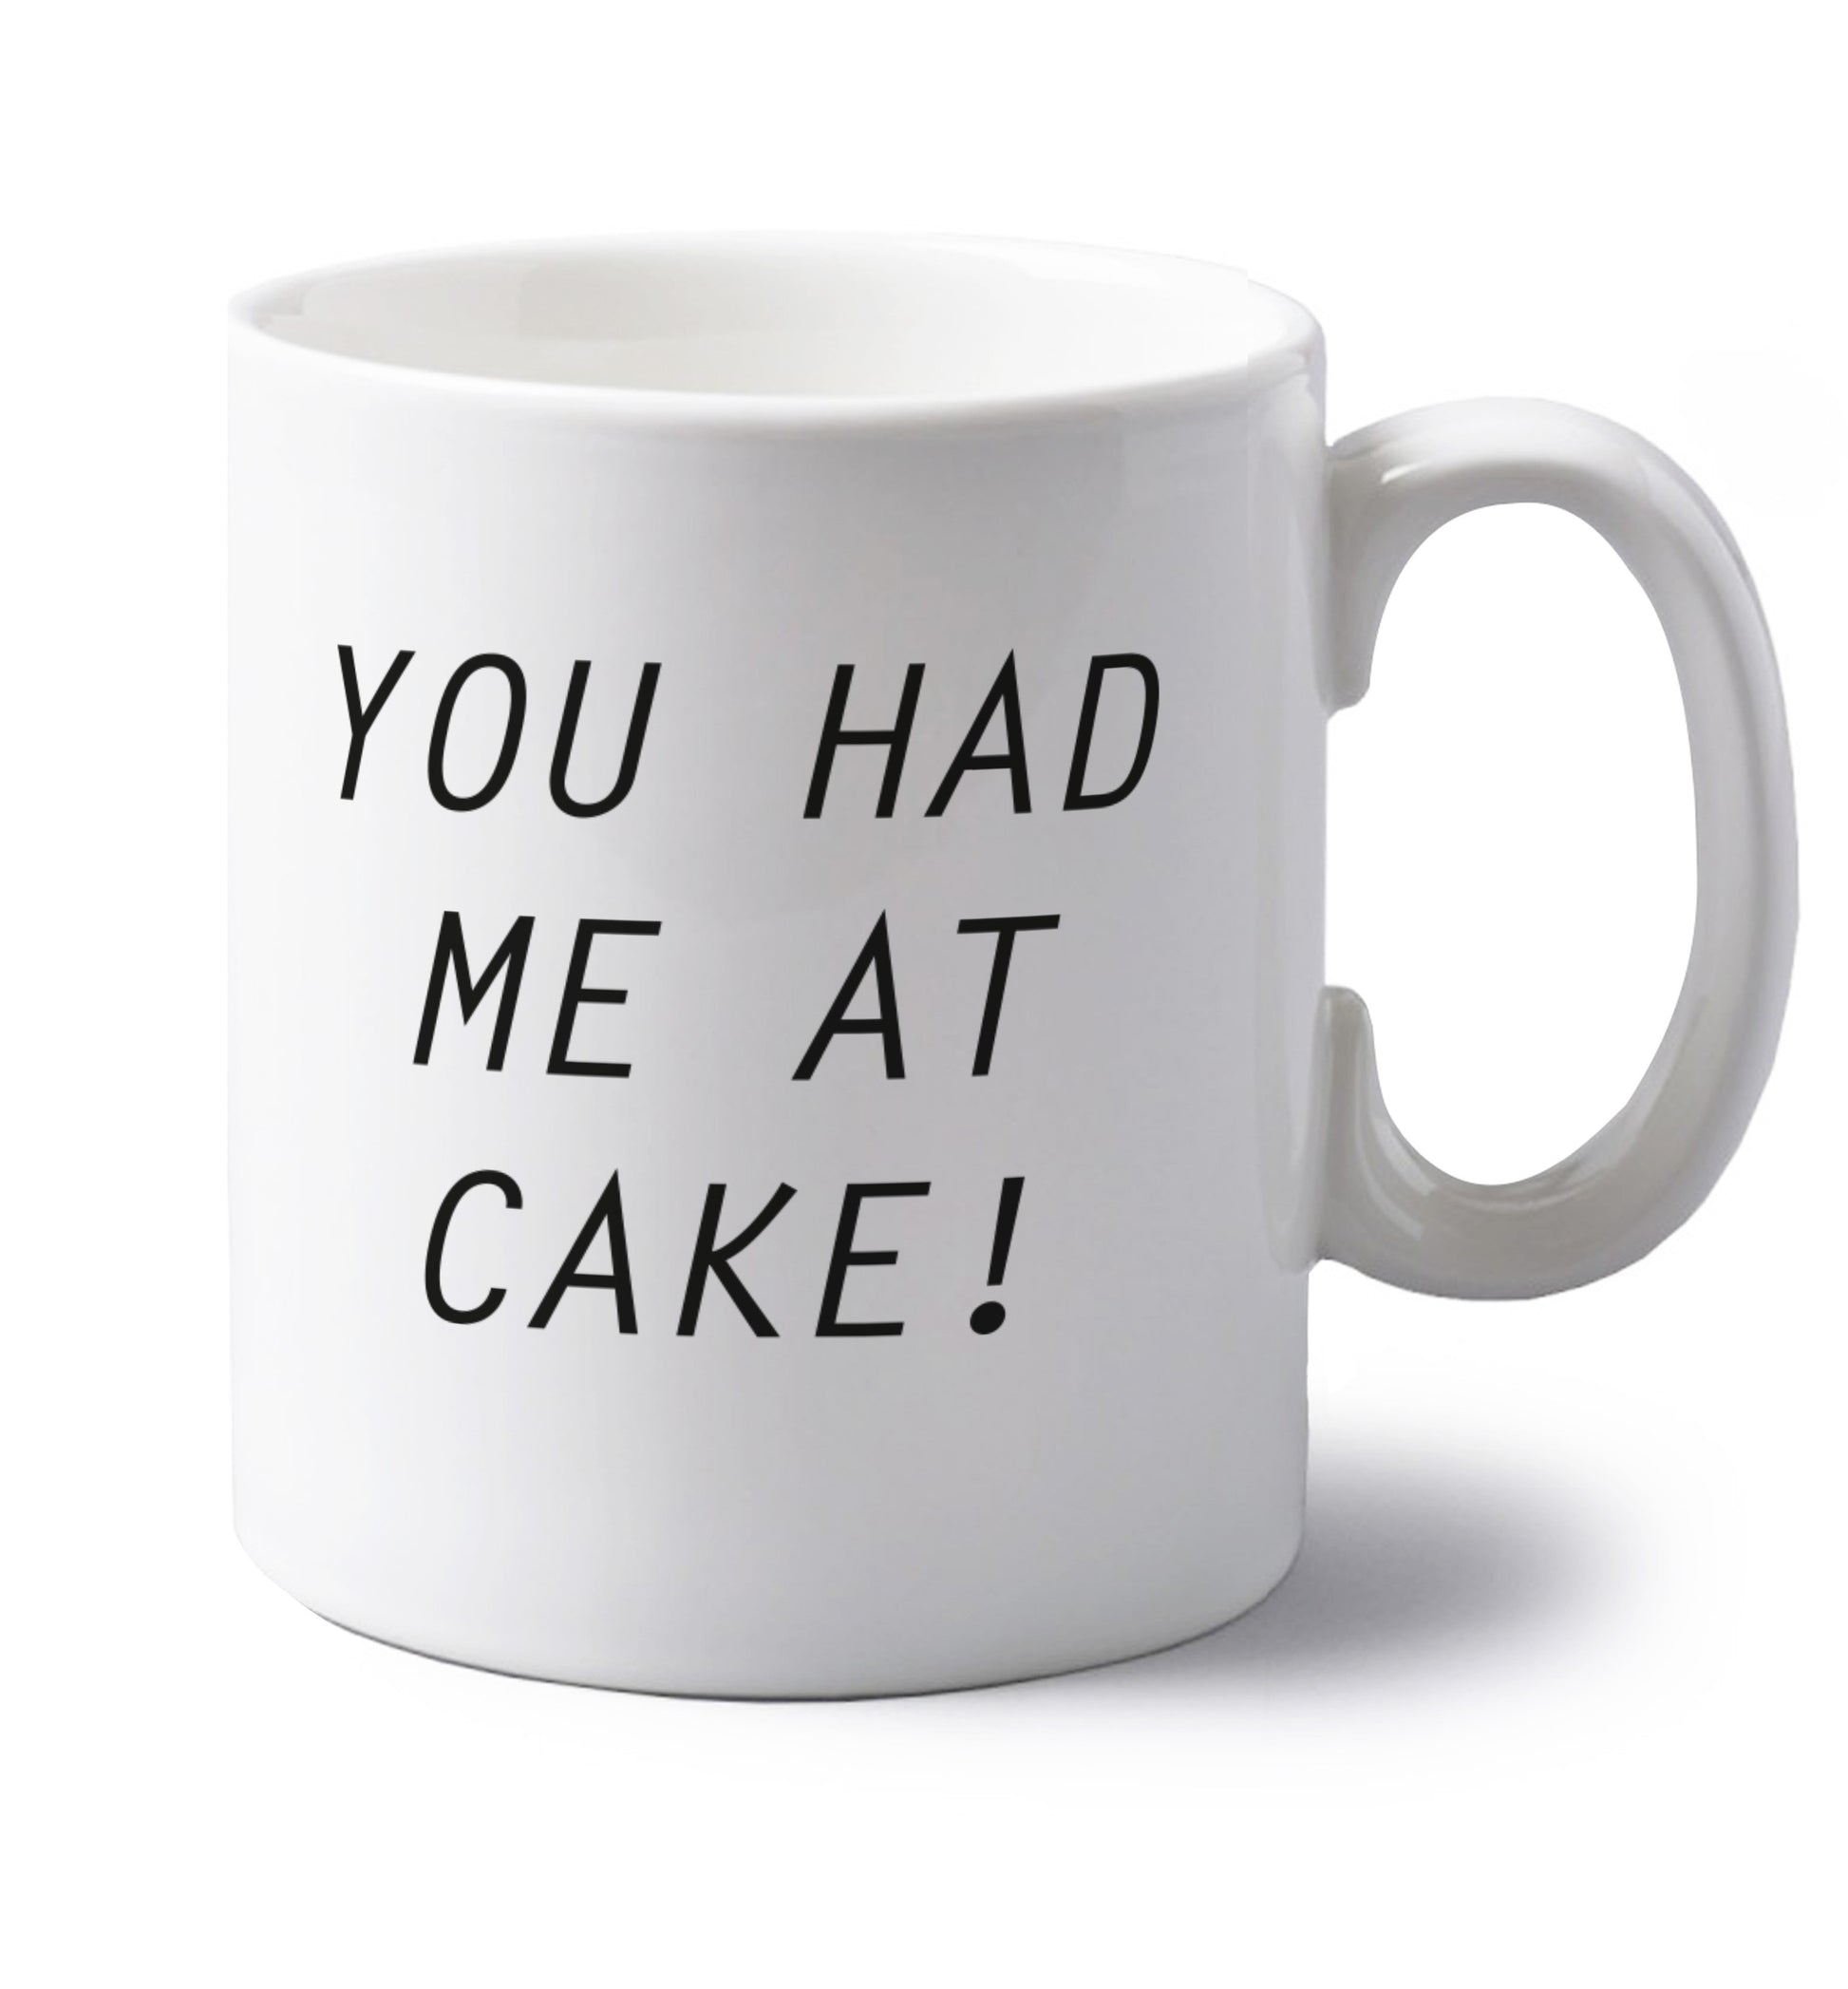 You had me at cake left handed white ceramic mug 